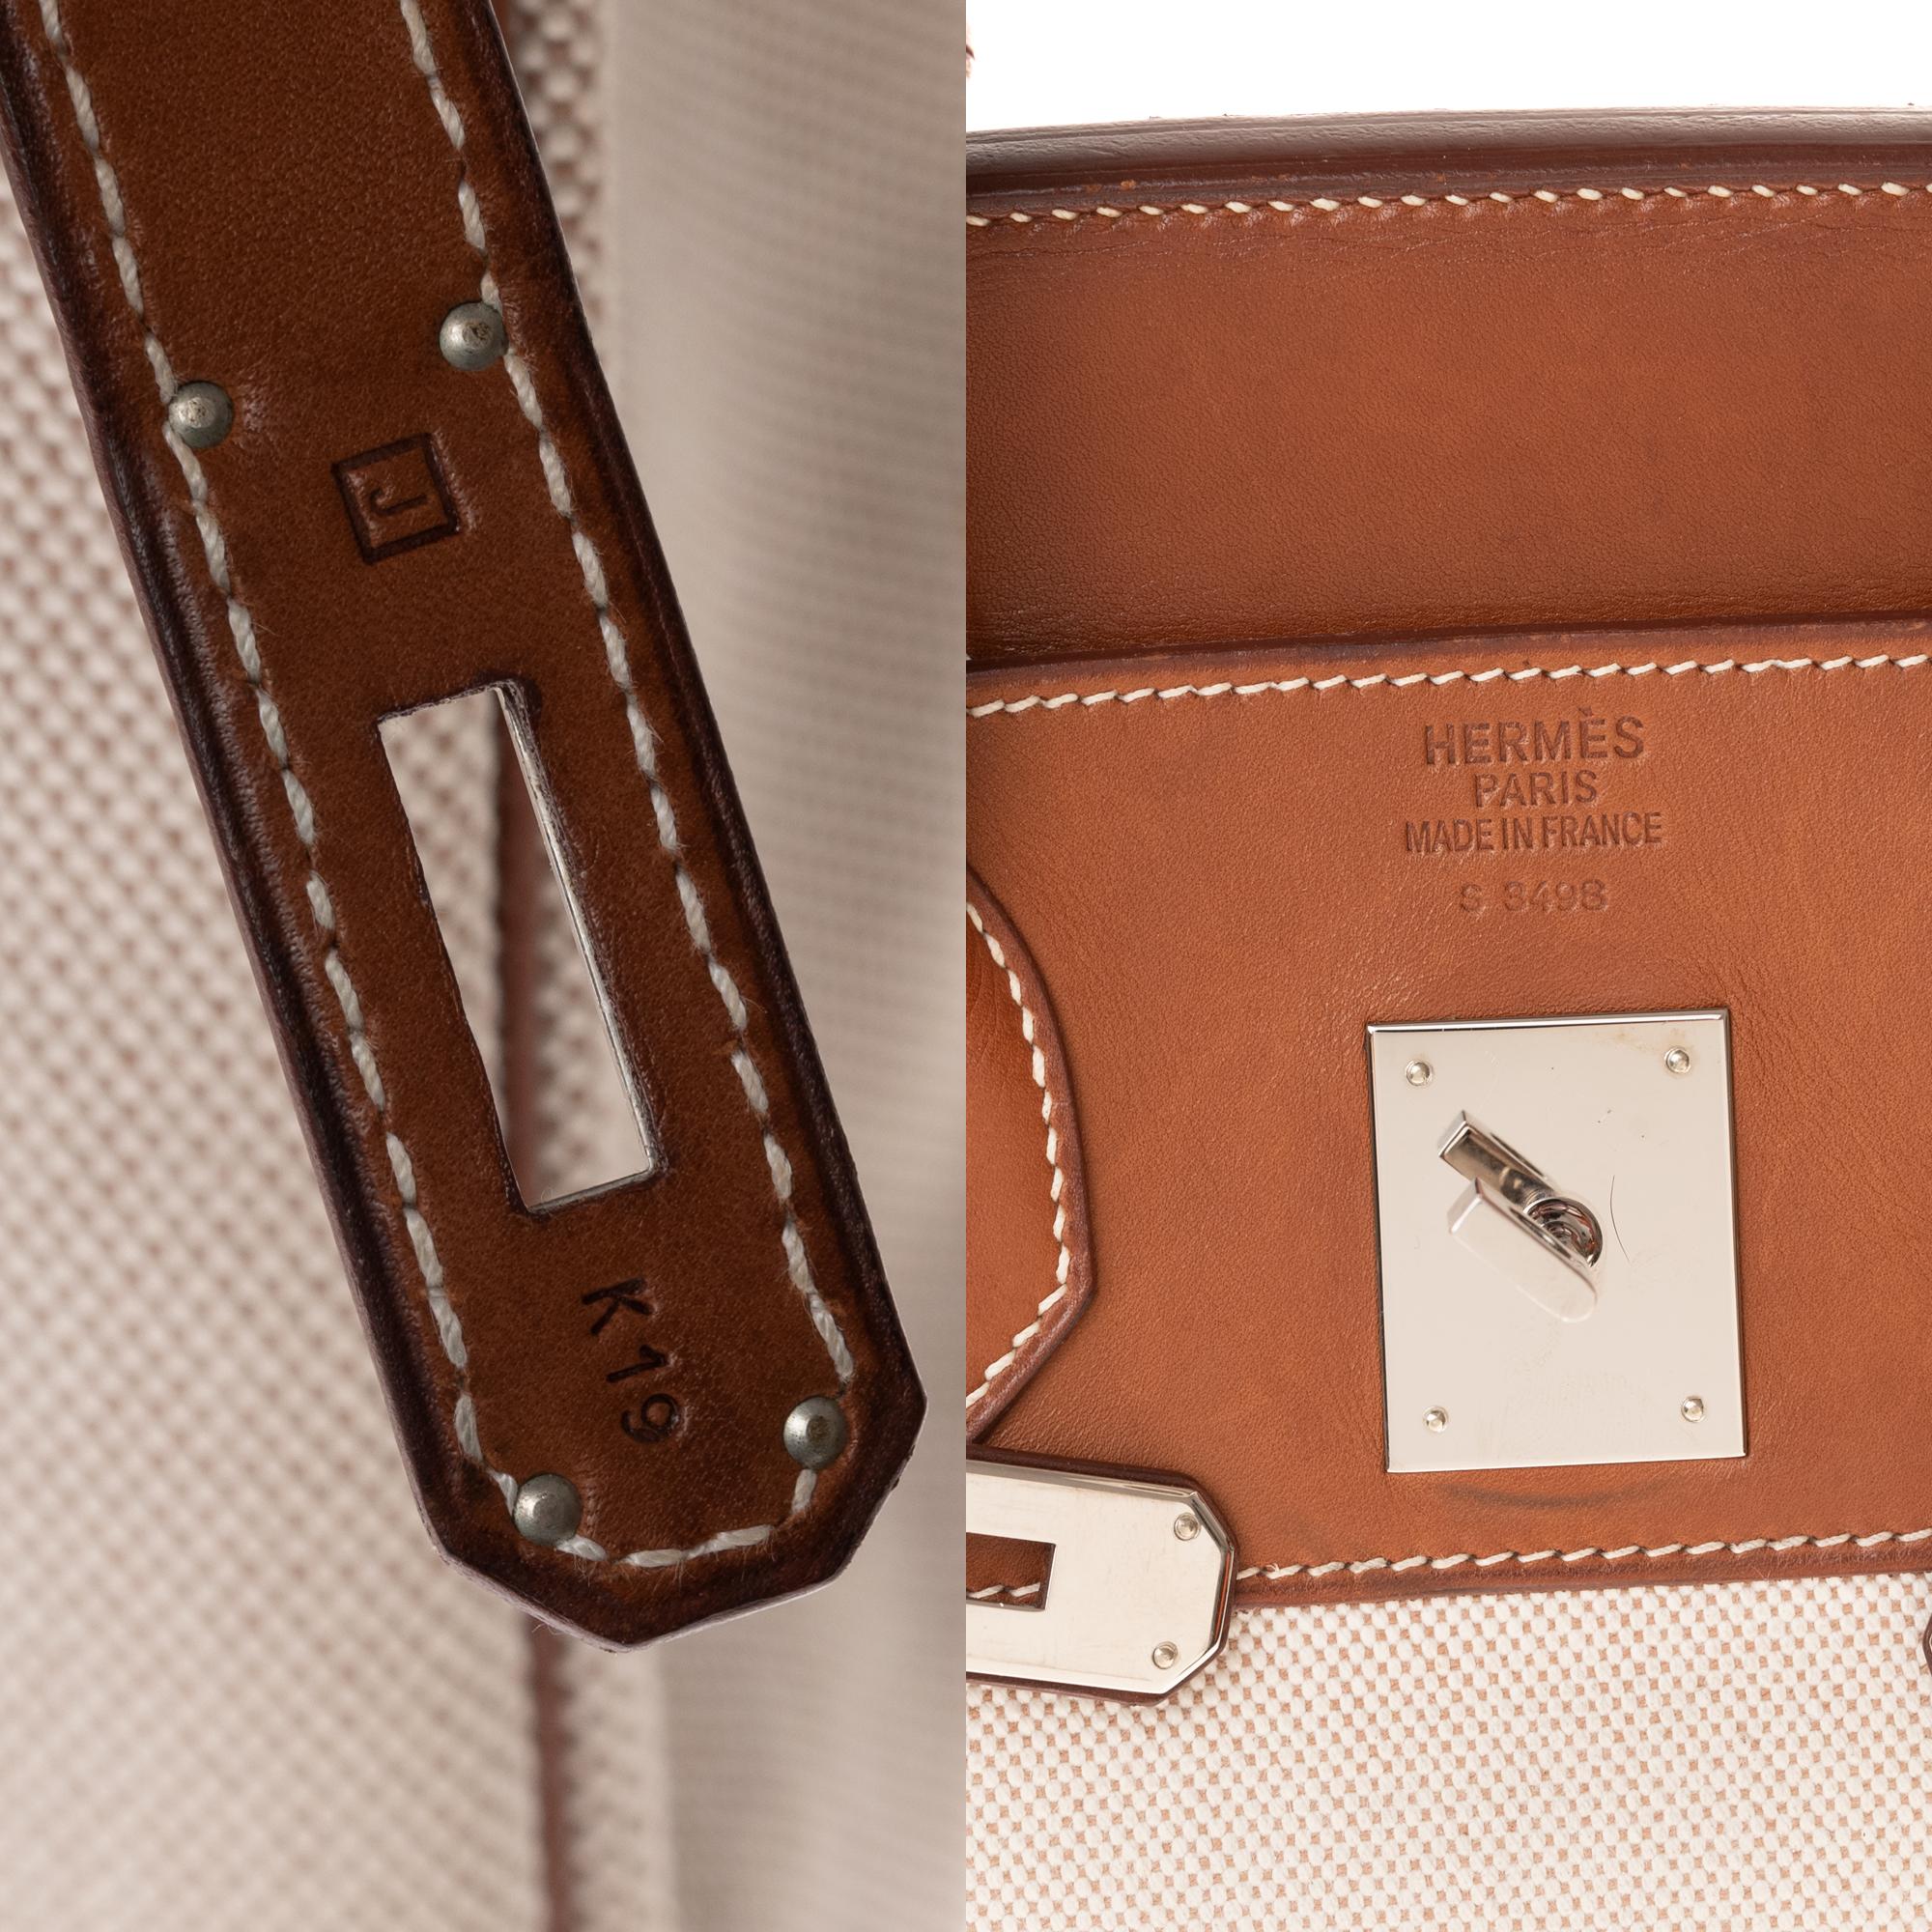 White Hermès Haut à Courroies 32 handbag in beige canvas & brown barenia leather, PHW